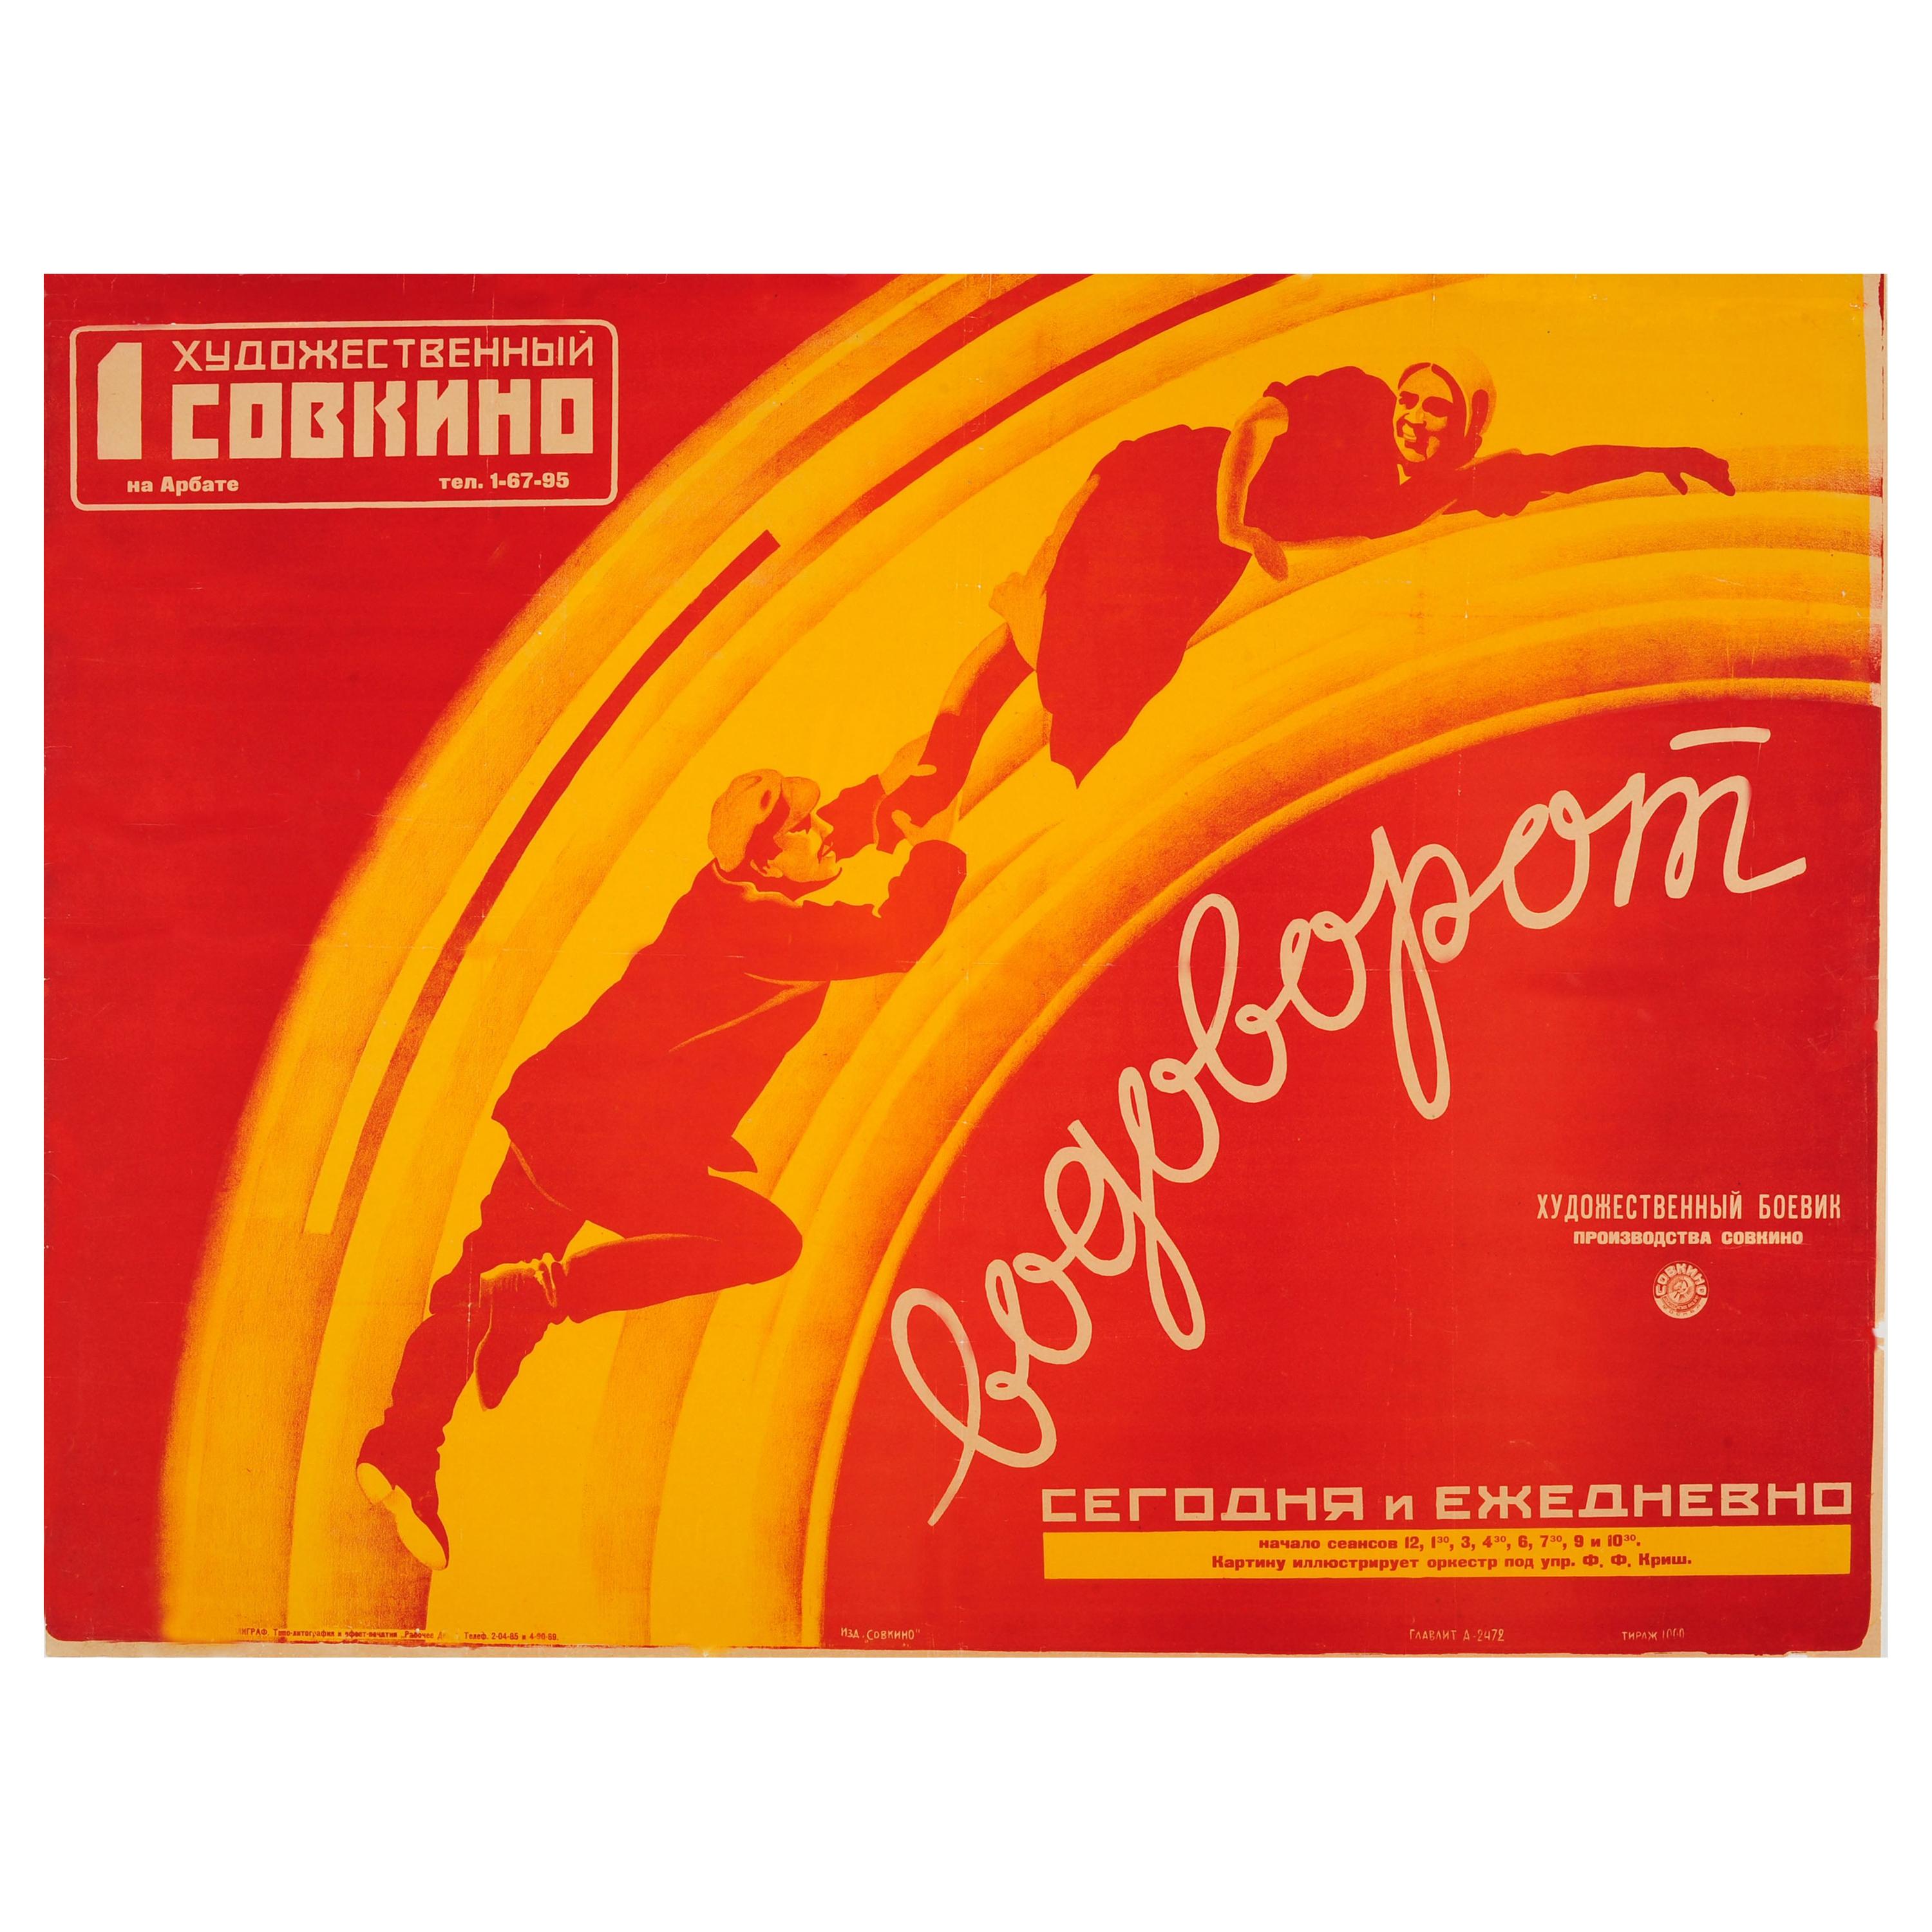 Original Vintage Soviet Film Poster for a Silent Movie The Whirlpool Vodororot